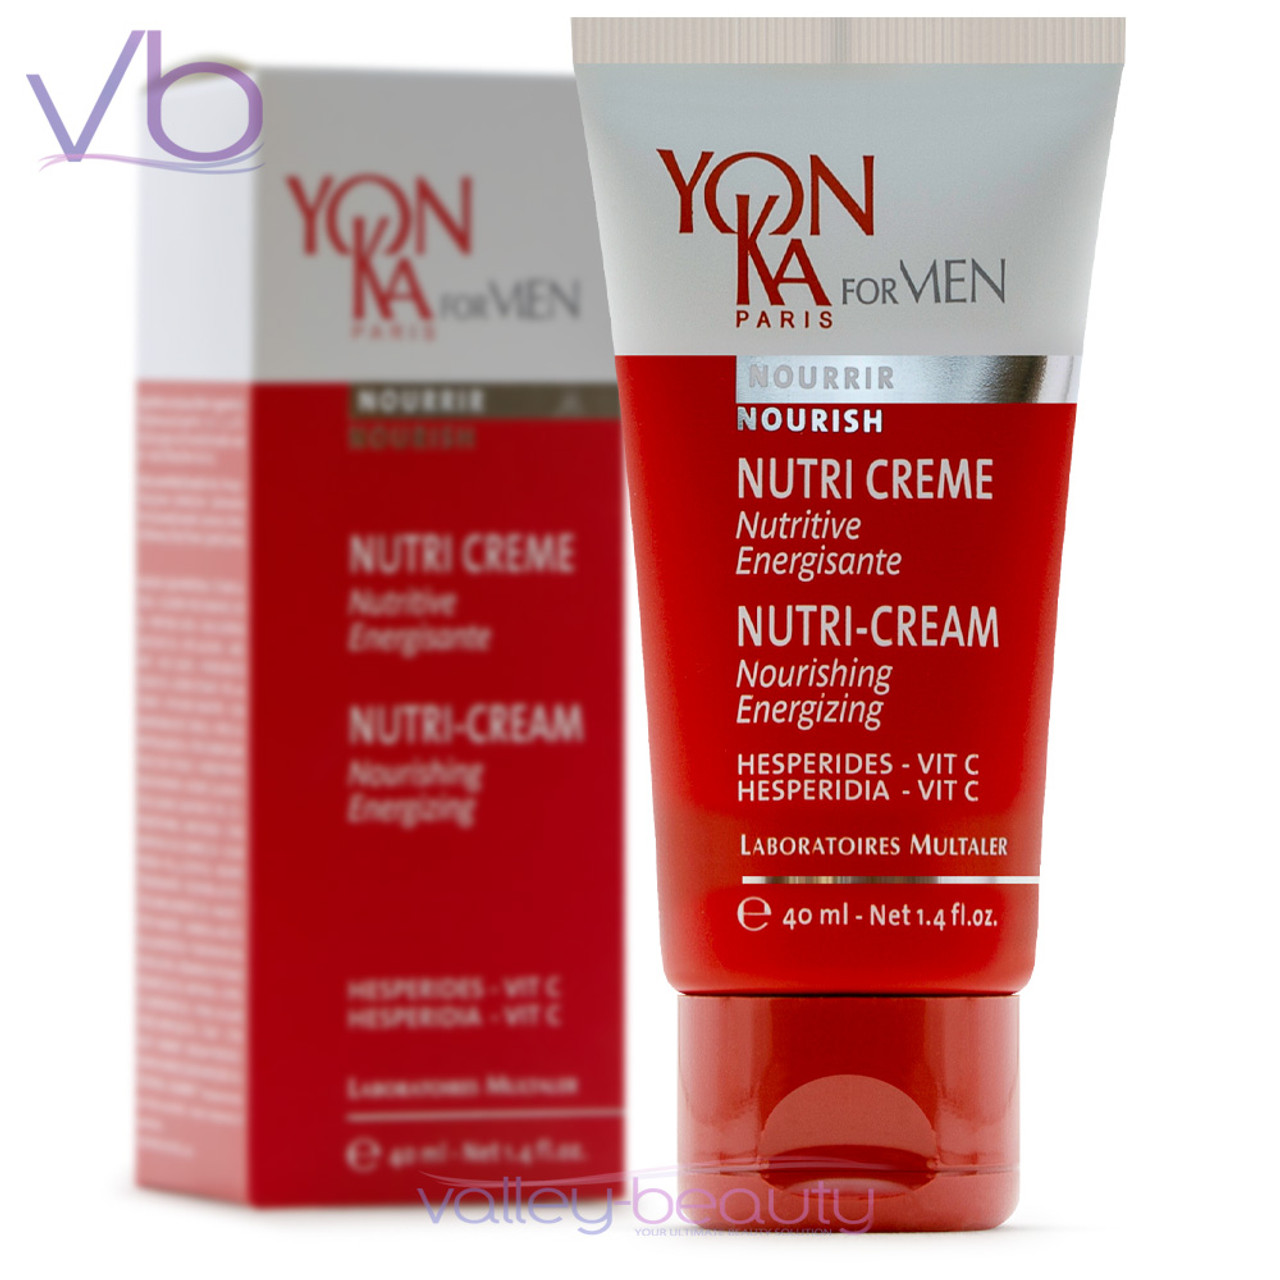 Yonka for Men Nutri-Cream | Nourishing & Energizing Moisturizer, 1.4 fl.oz. EXP 04/2025